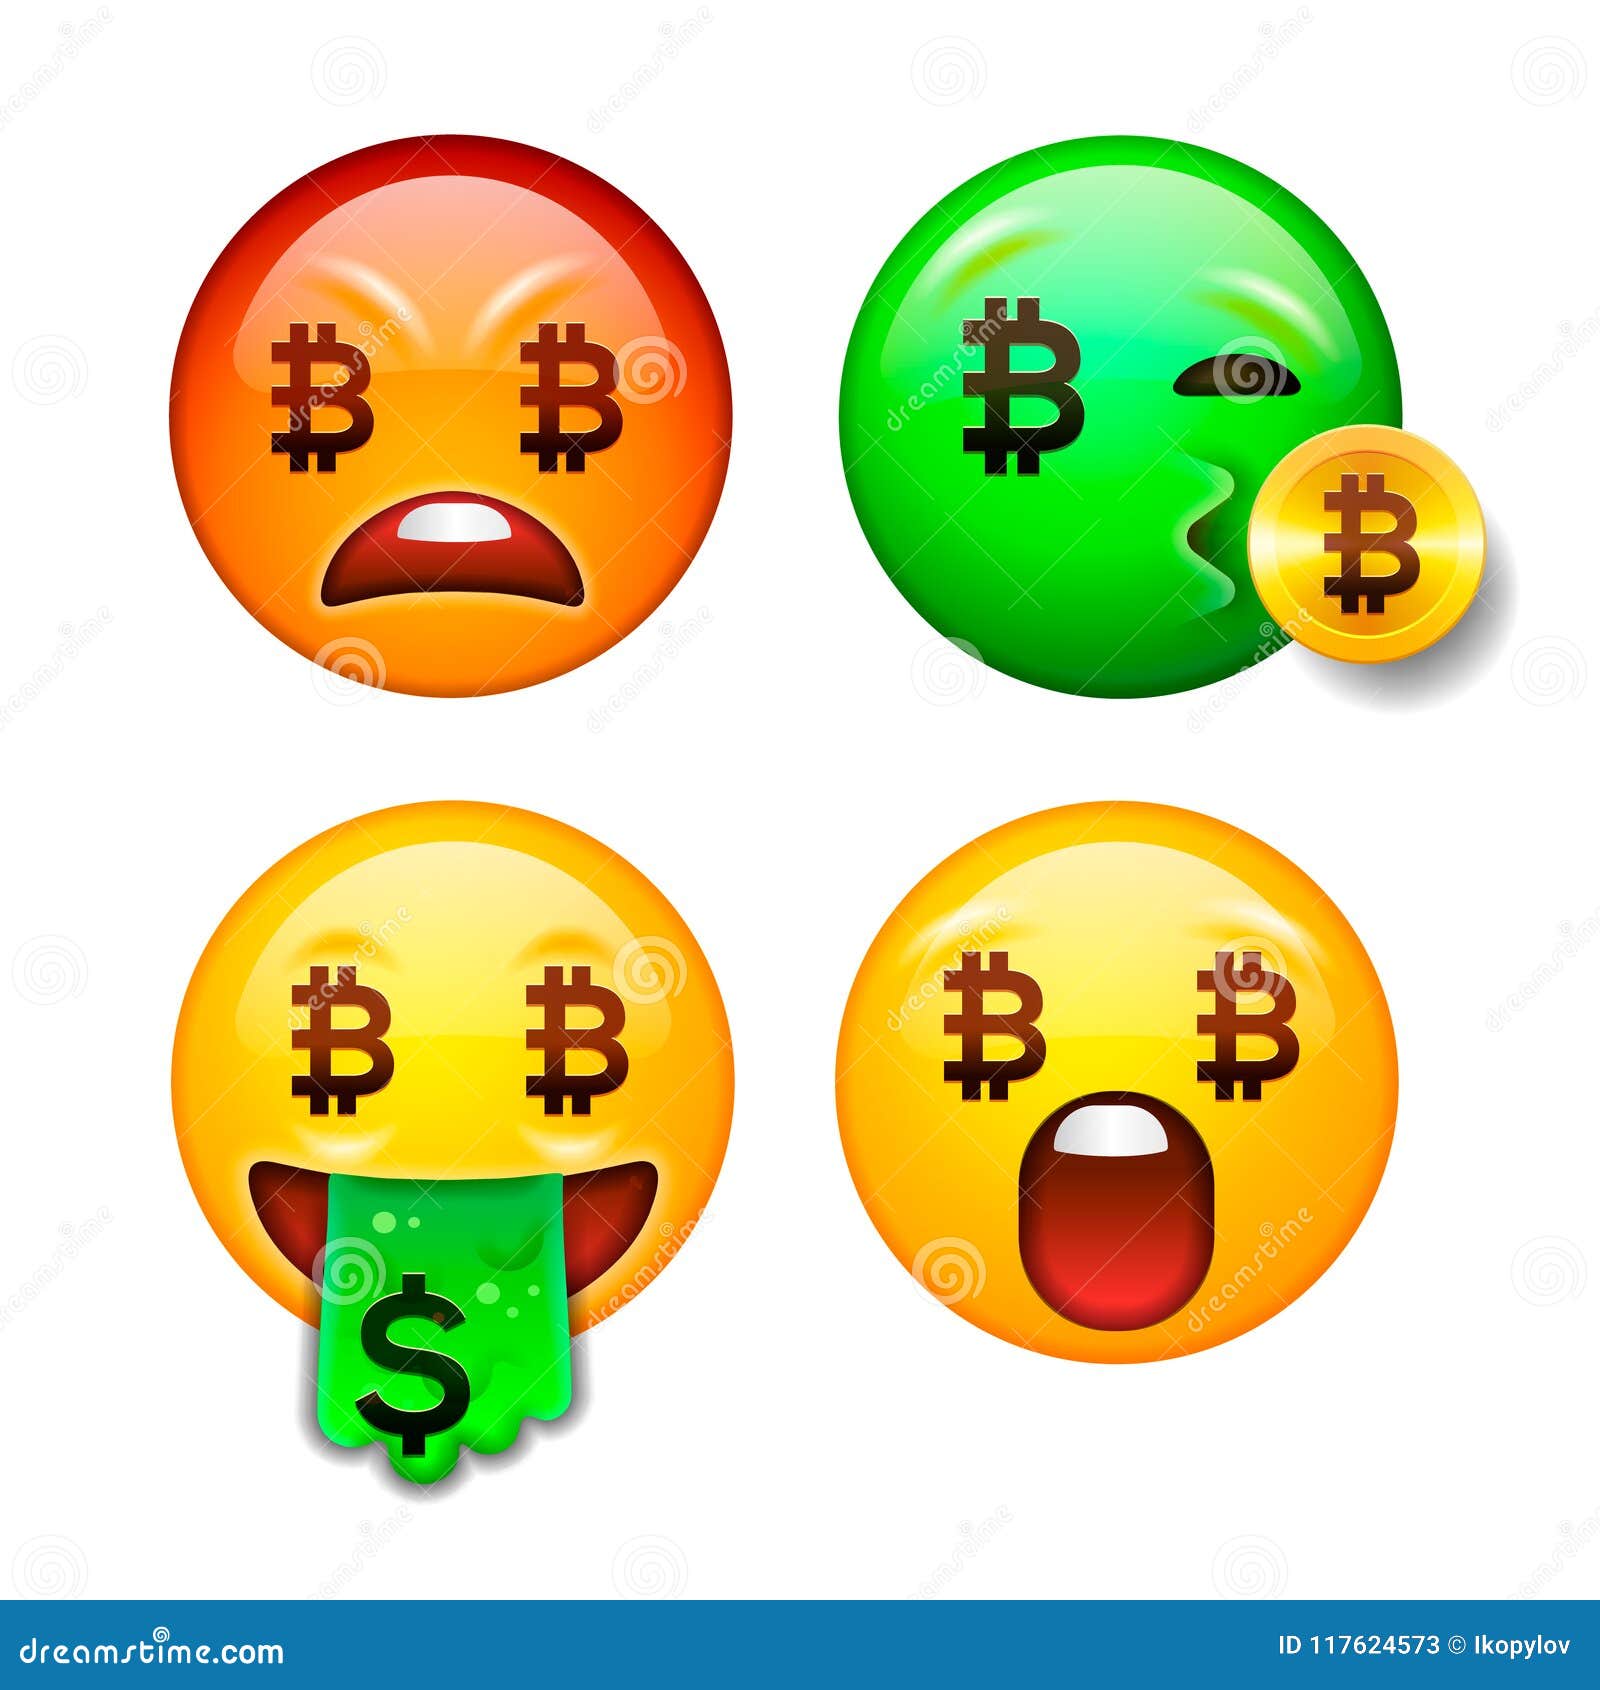 best crypto emoji